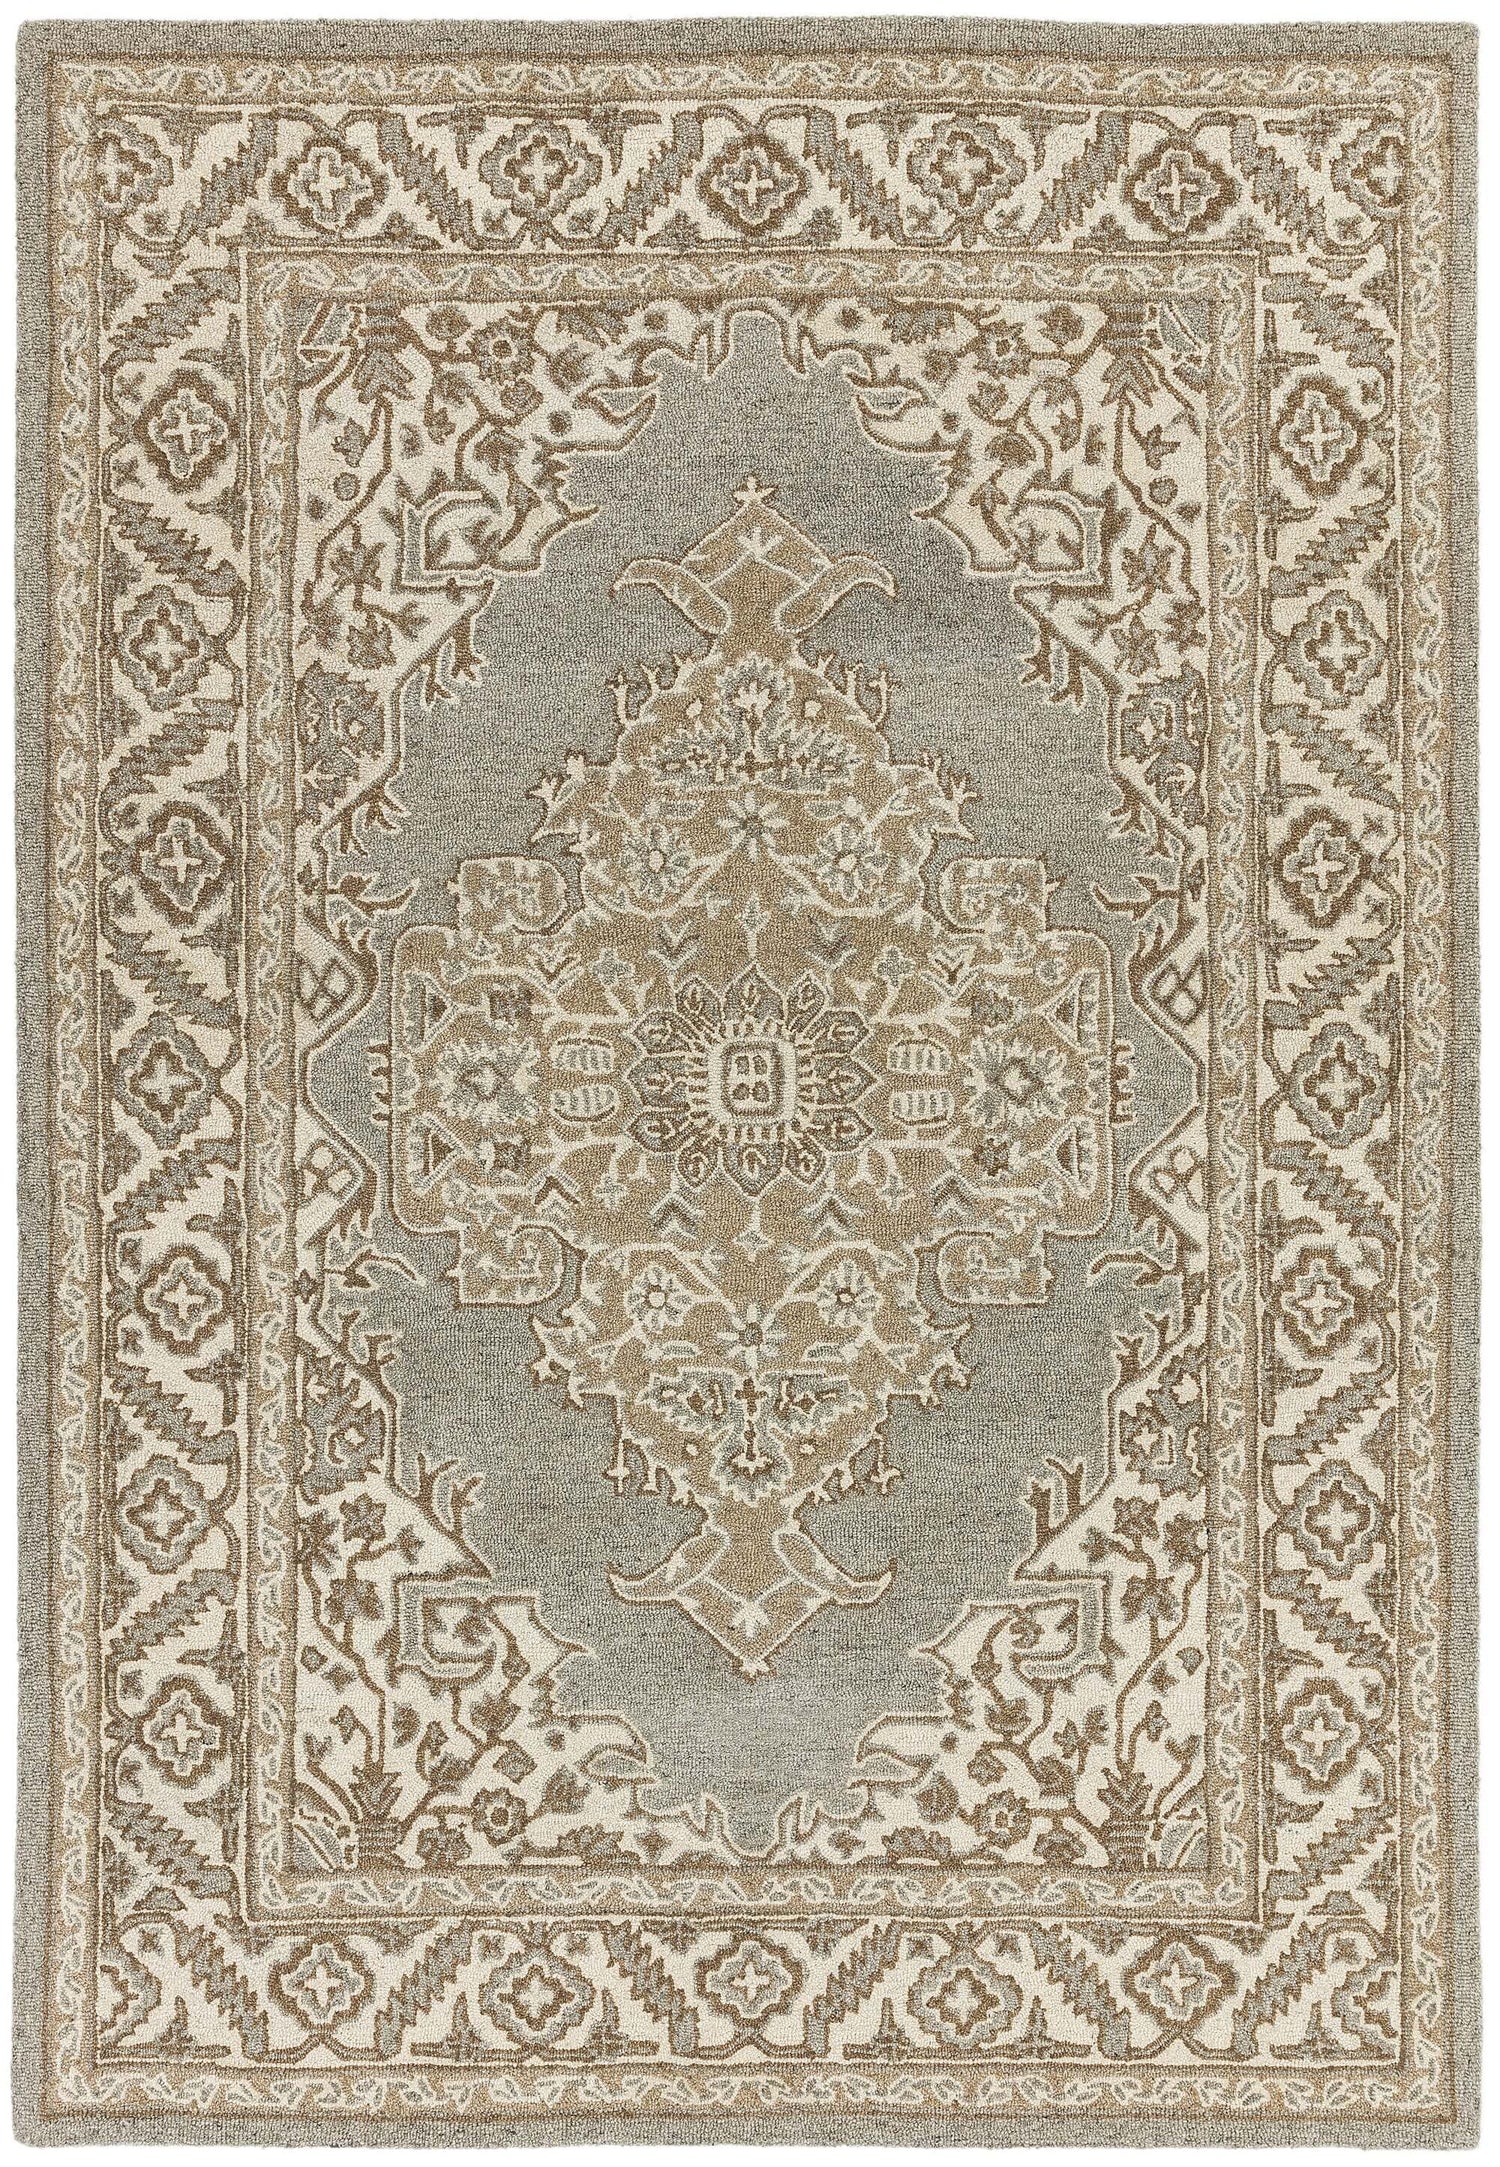  Asiatic Carpets-Asiatic Carpets Bronte Fine Loop Hand Tufted Rug Natural - 120 x 170cm-Beige, Natural 997 